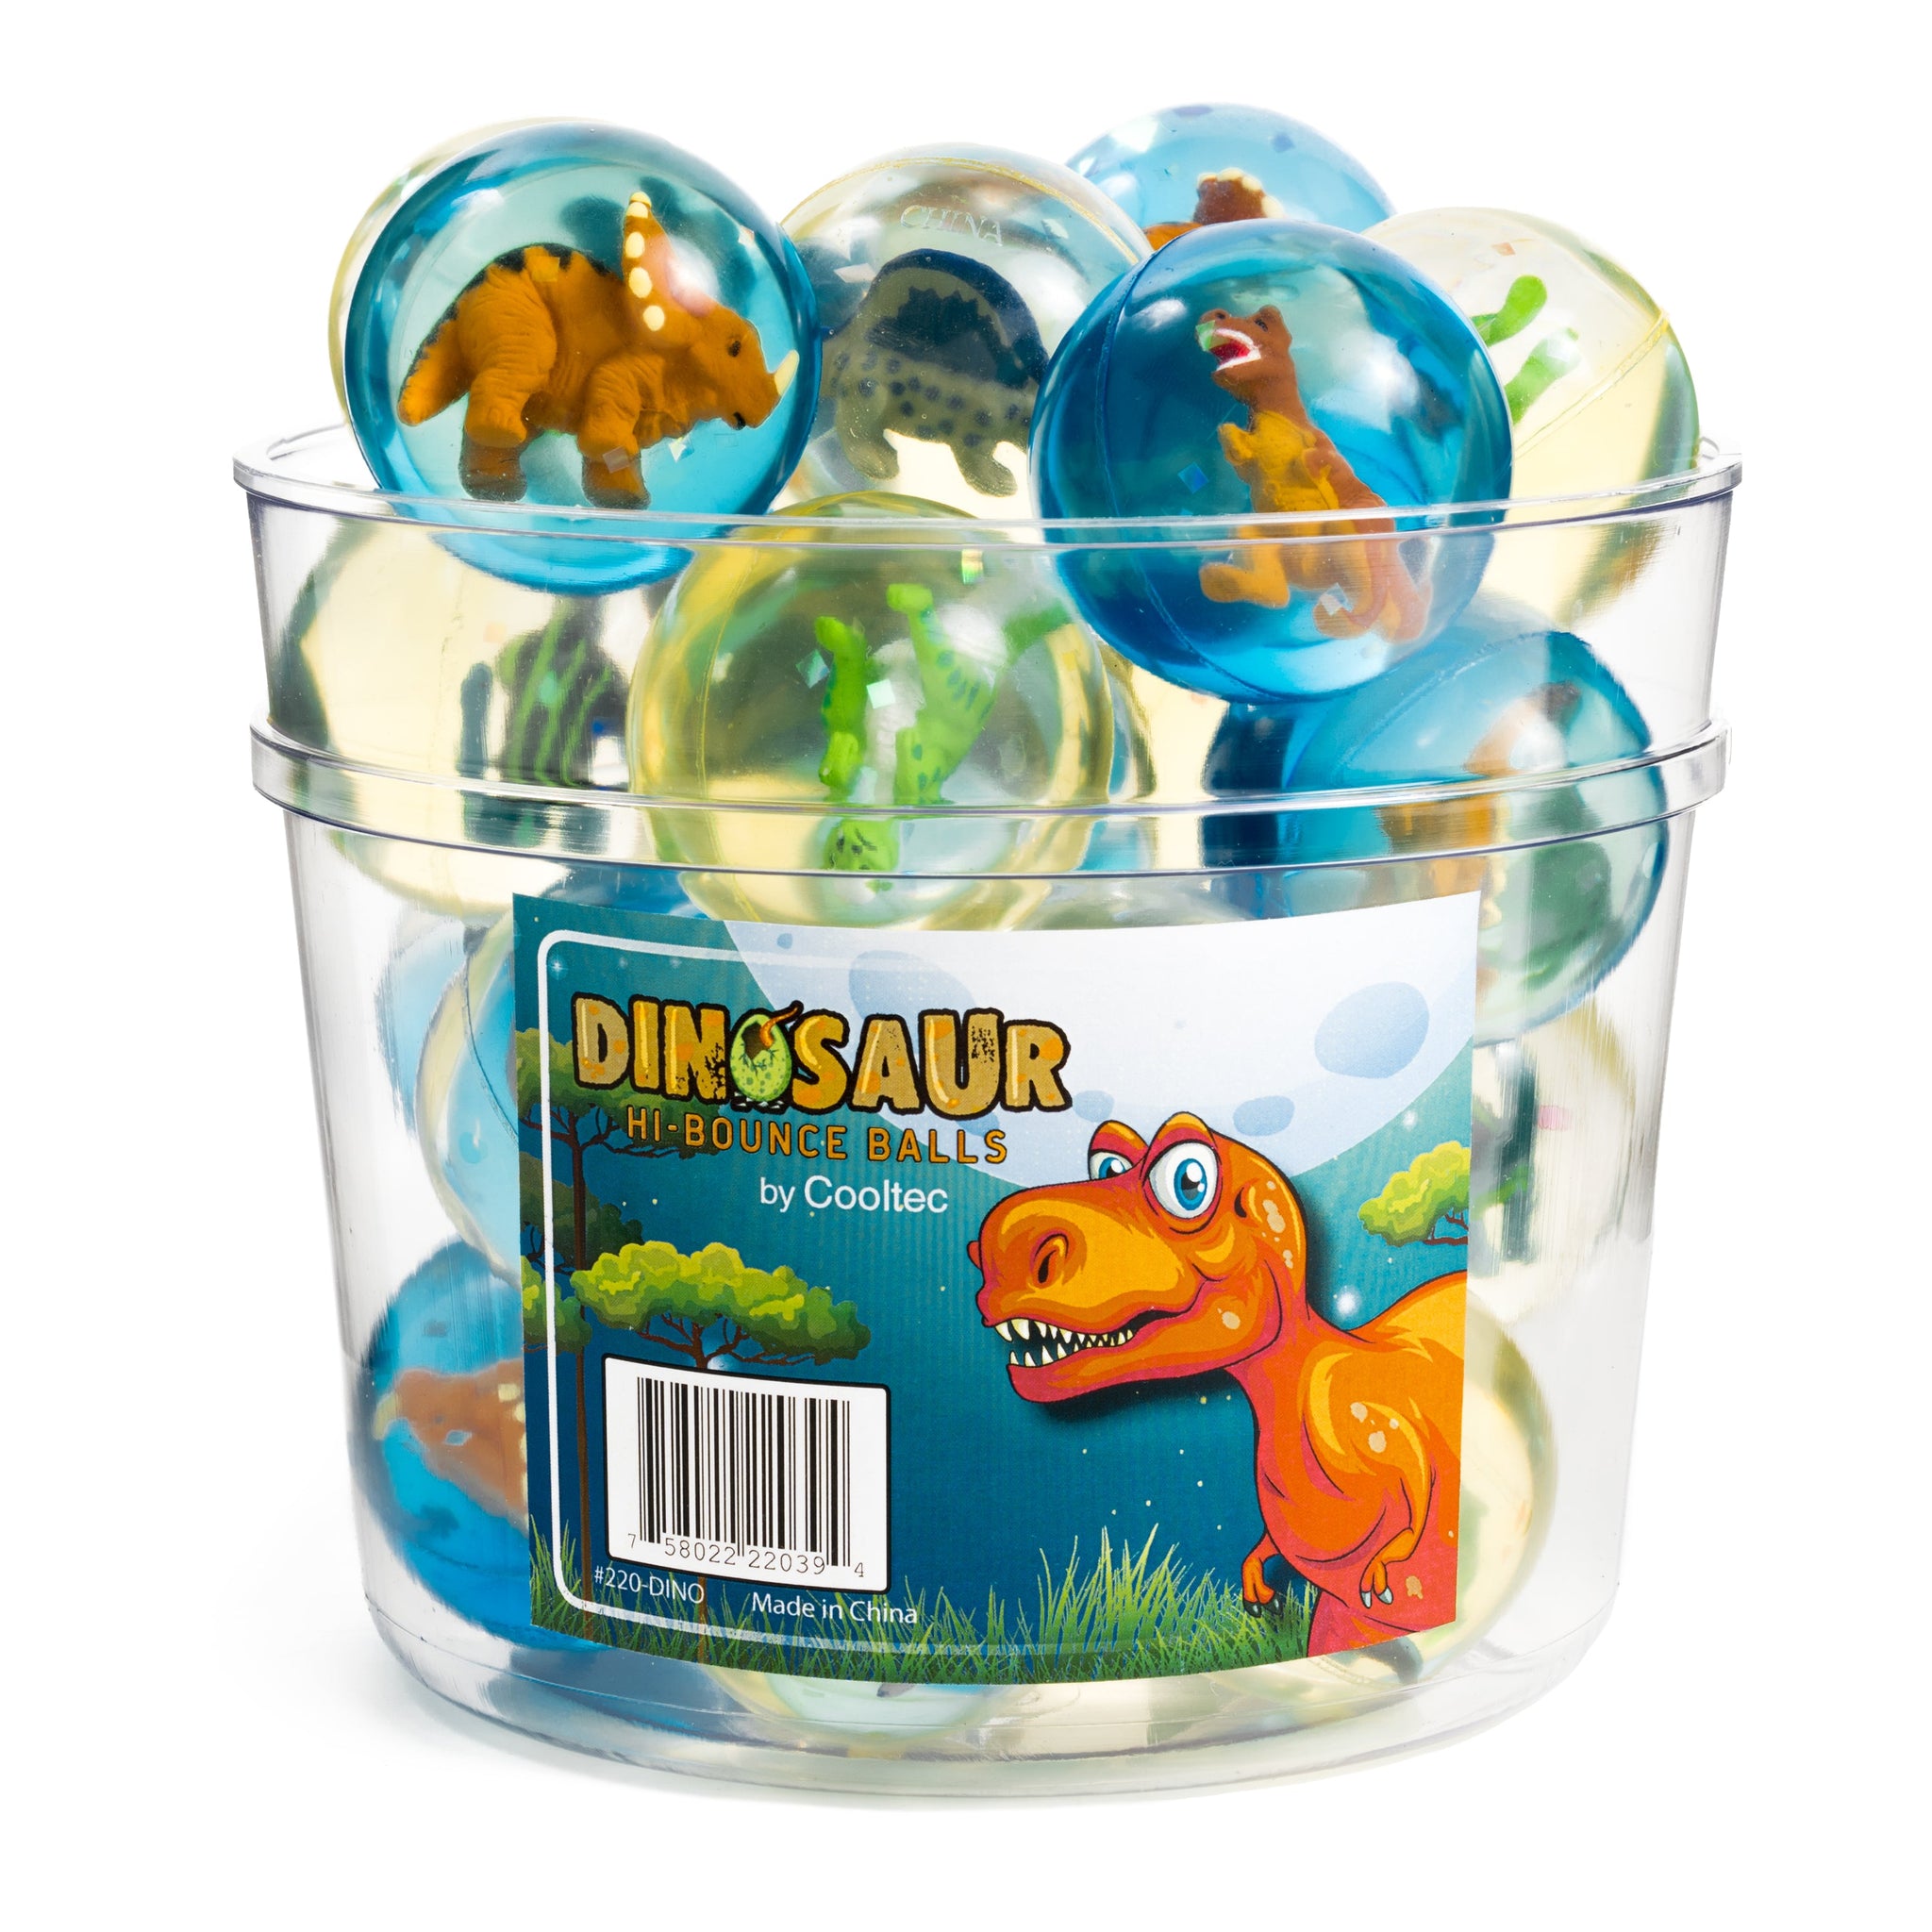 Dinosaur High Bounce Ball (24 pc REFILL)